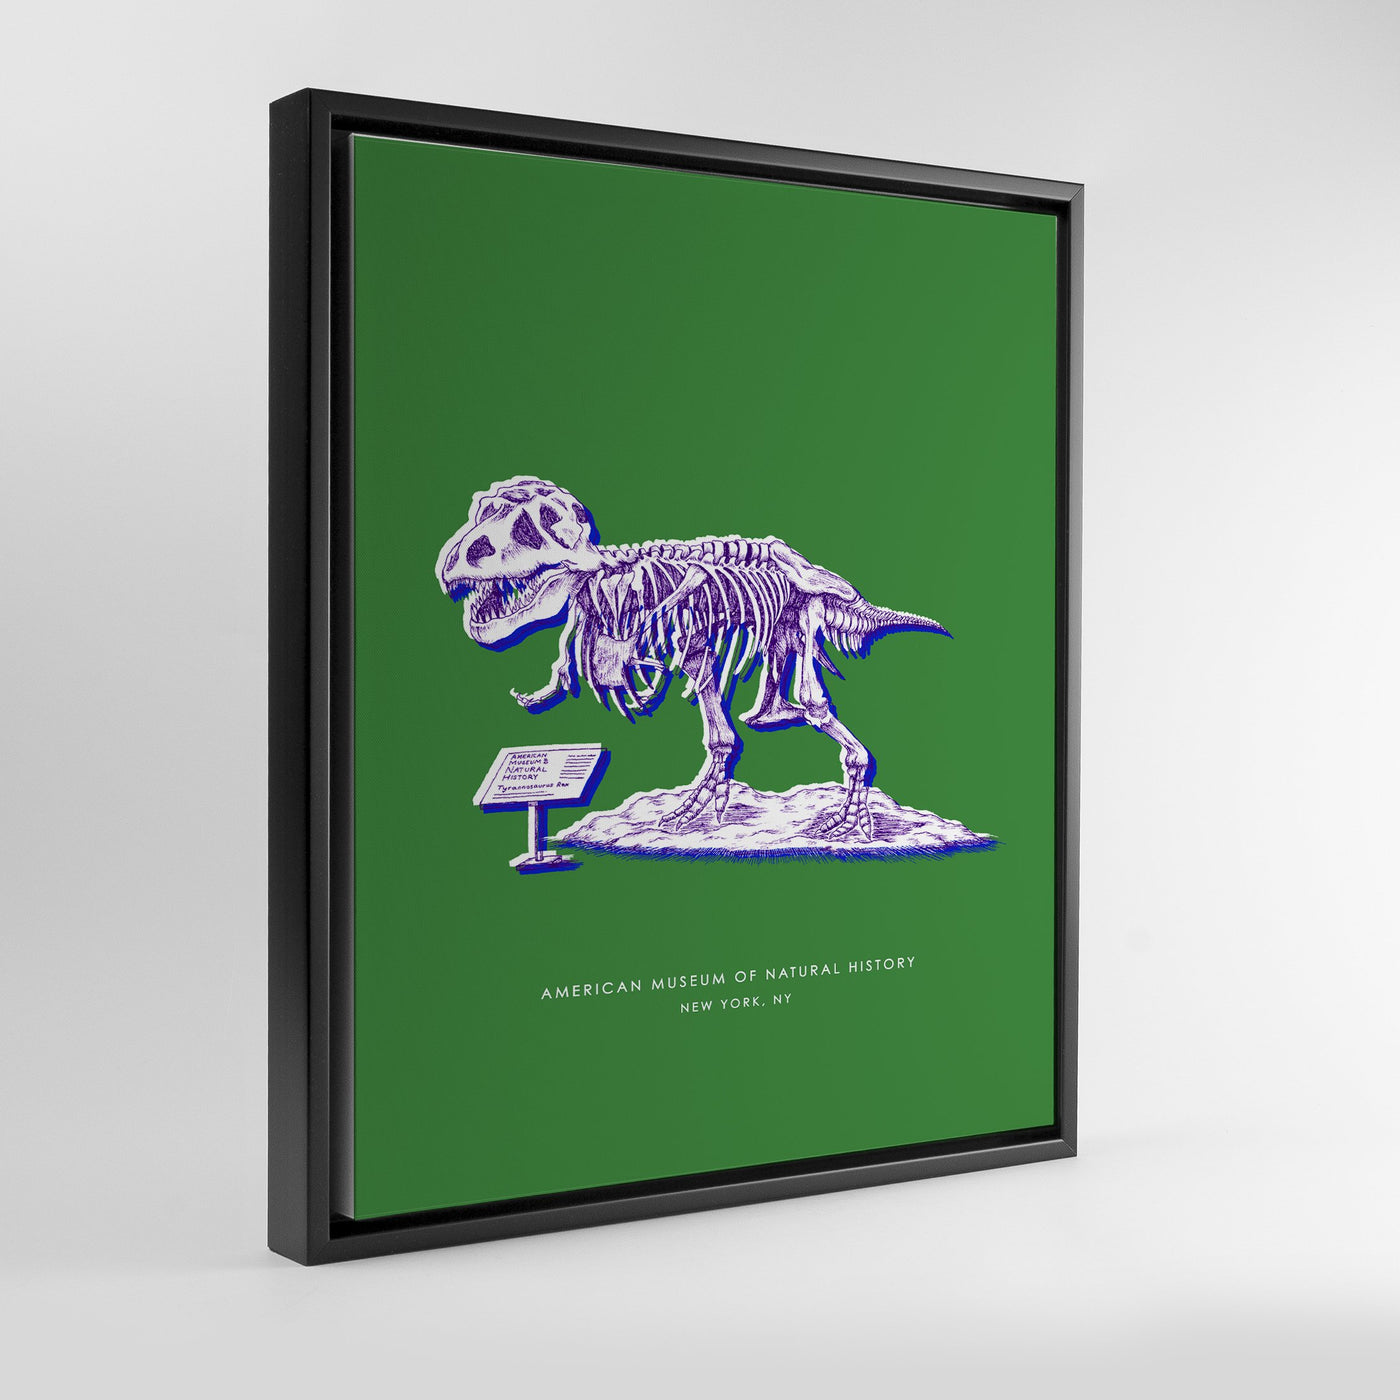 Gallery Prints Green Canvas / 8x10 / Black Frame New York Dinosaur Print Katie Kime